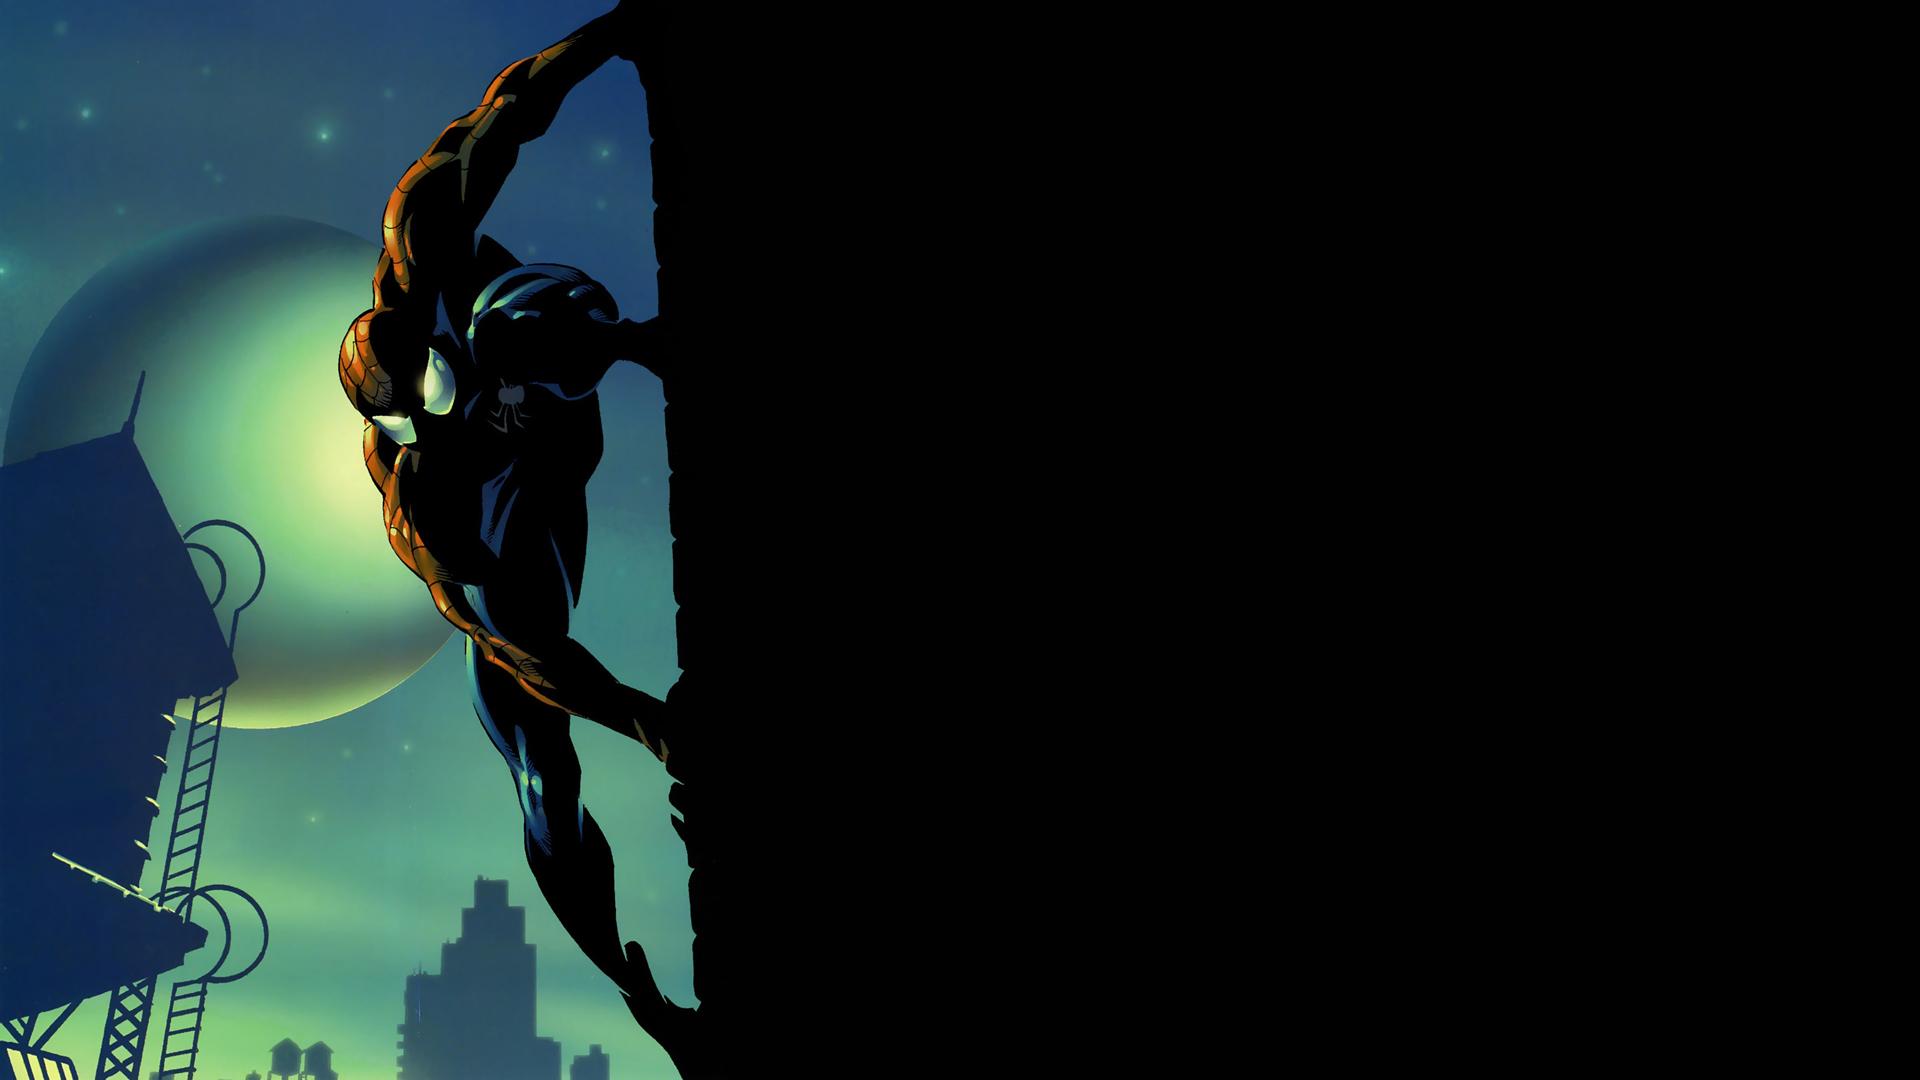  Spiderman  Comics Spider man  Superhero dark  wallpaper  